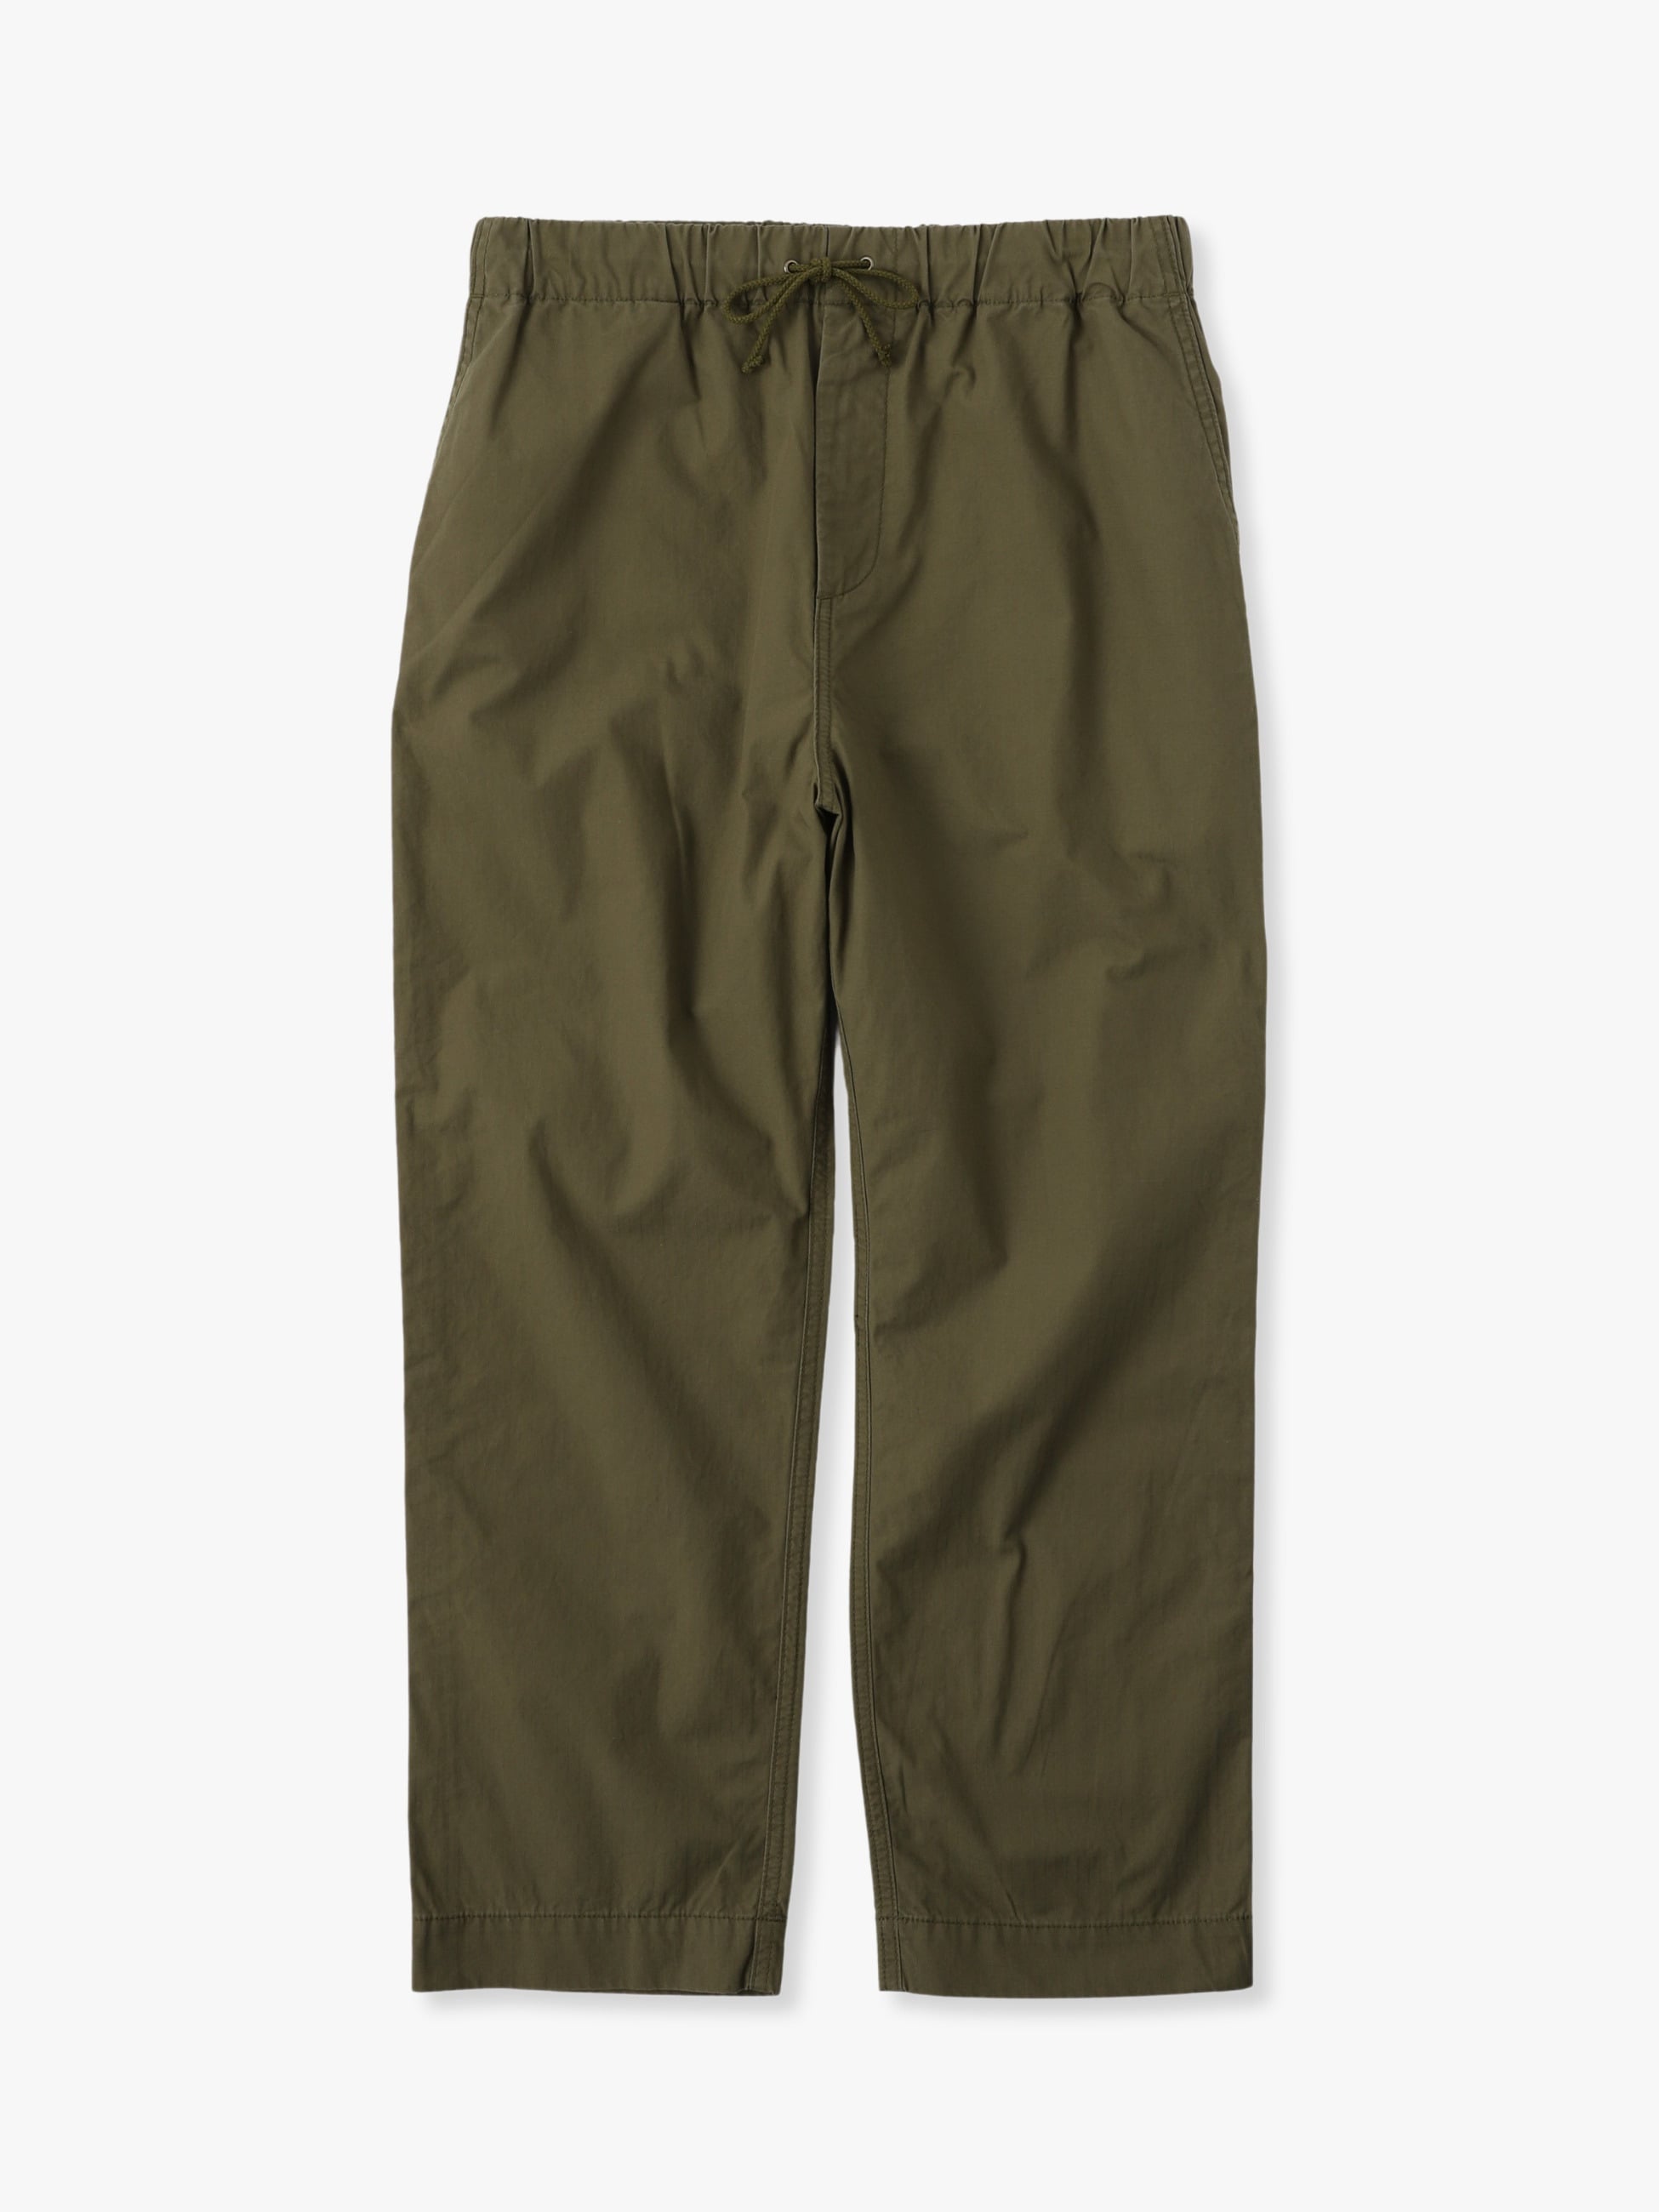 ron herman military pants